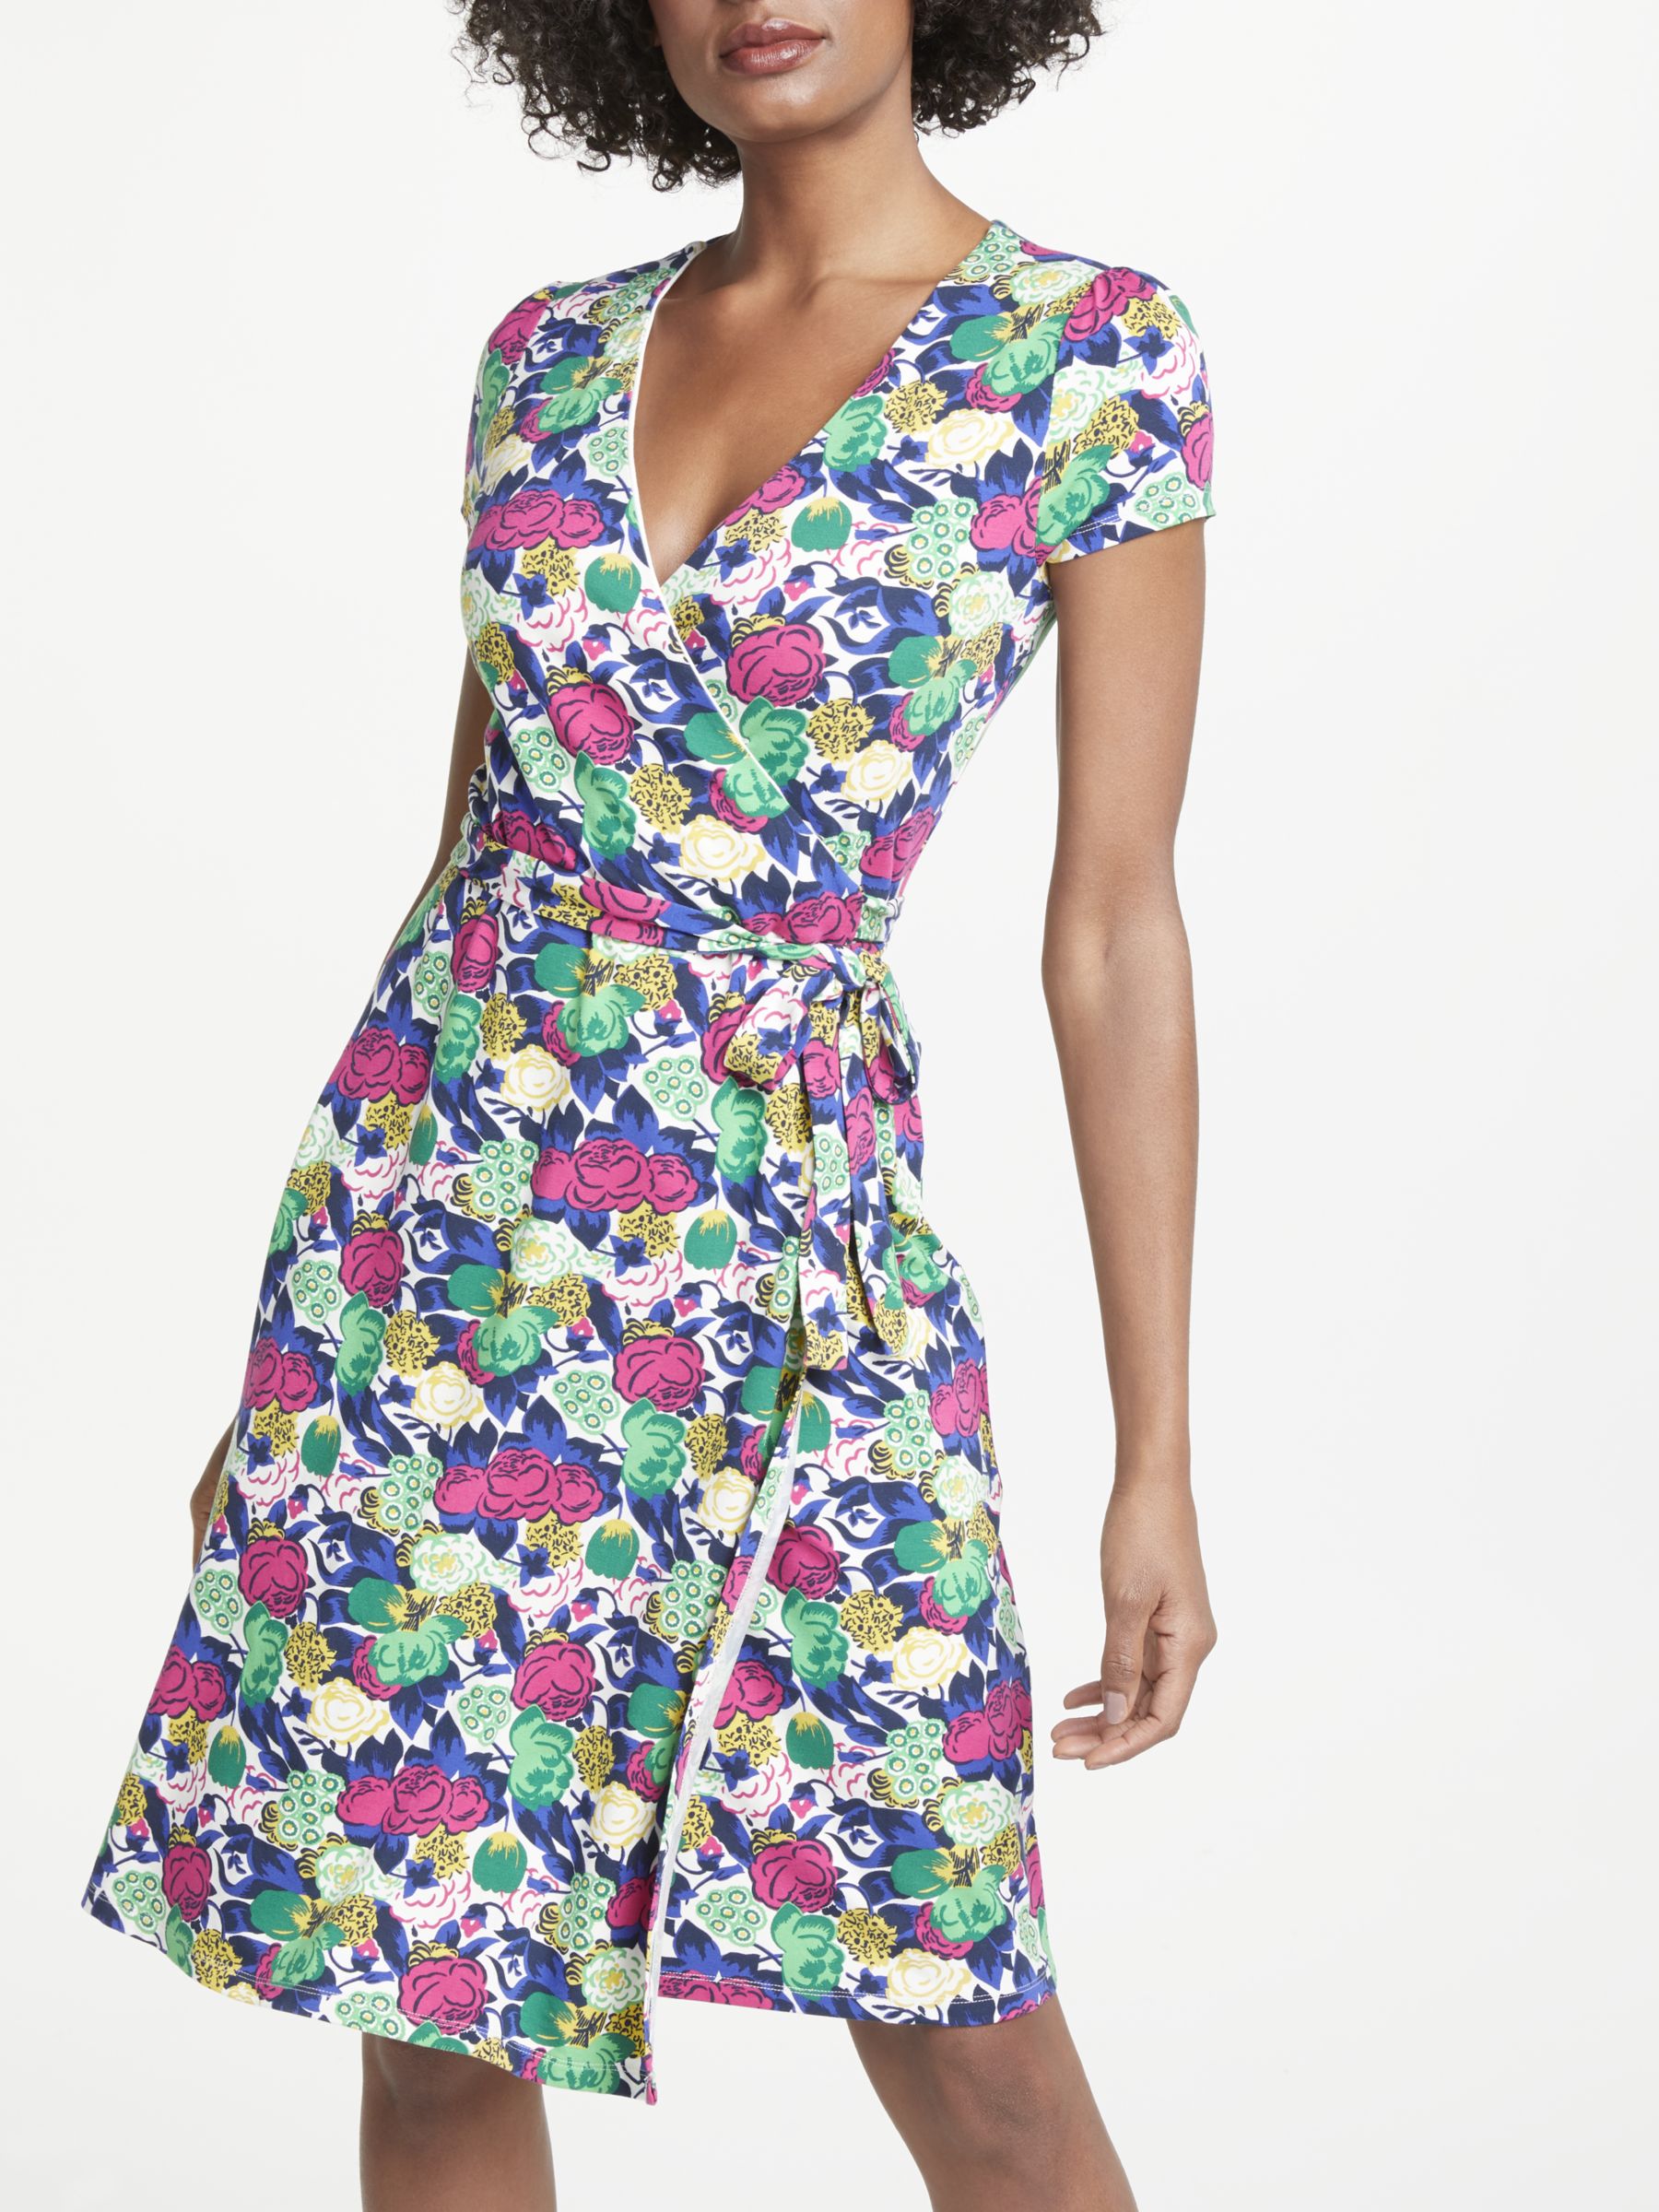 Boden Summer Dresses Store, 54% OFF | pwdnutrition.com